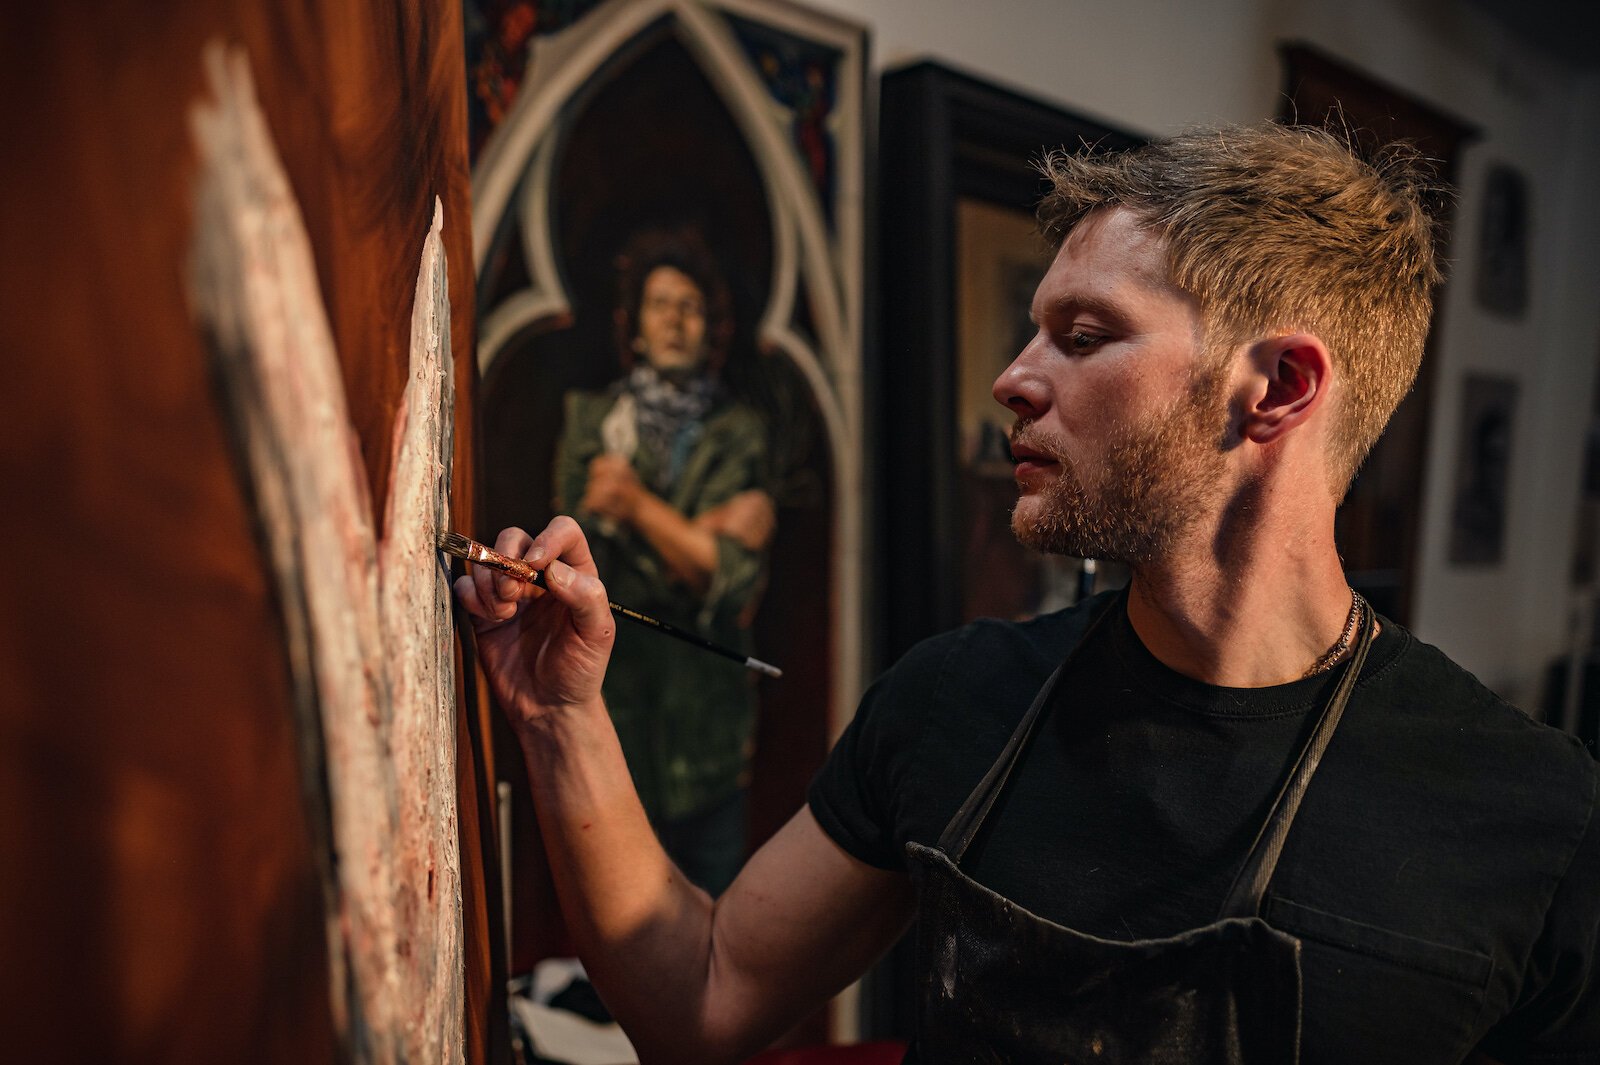 Artist Peter Lupkin works on a painting in studio.